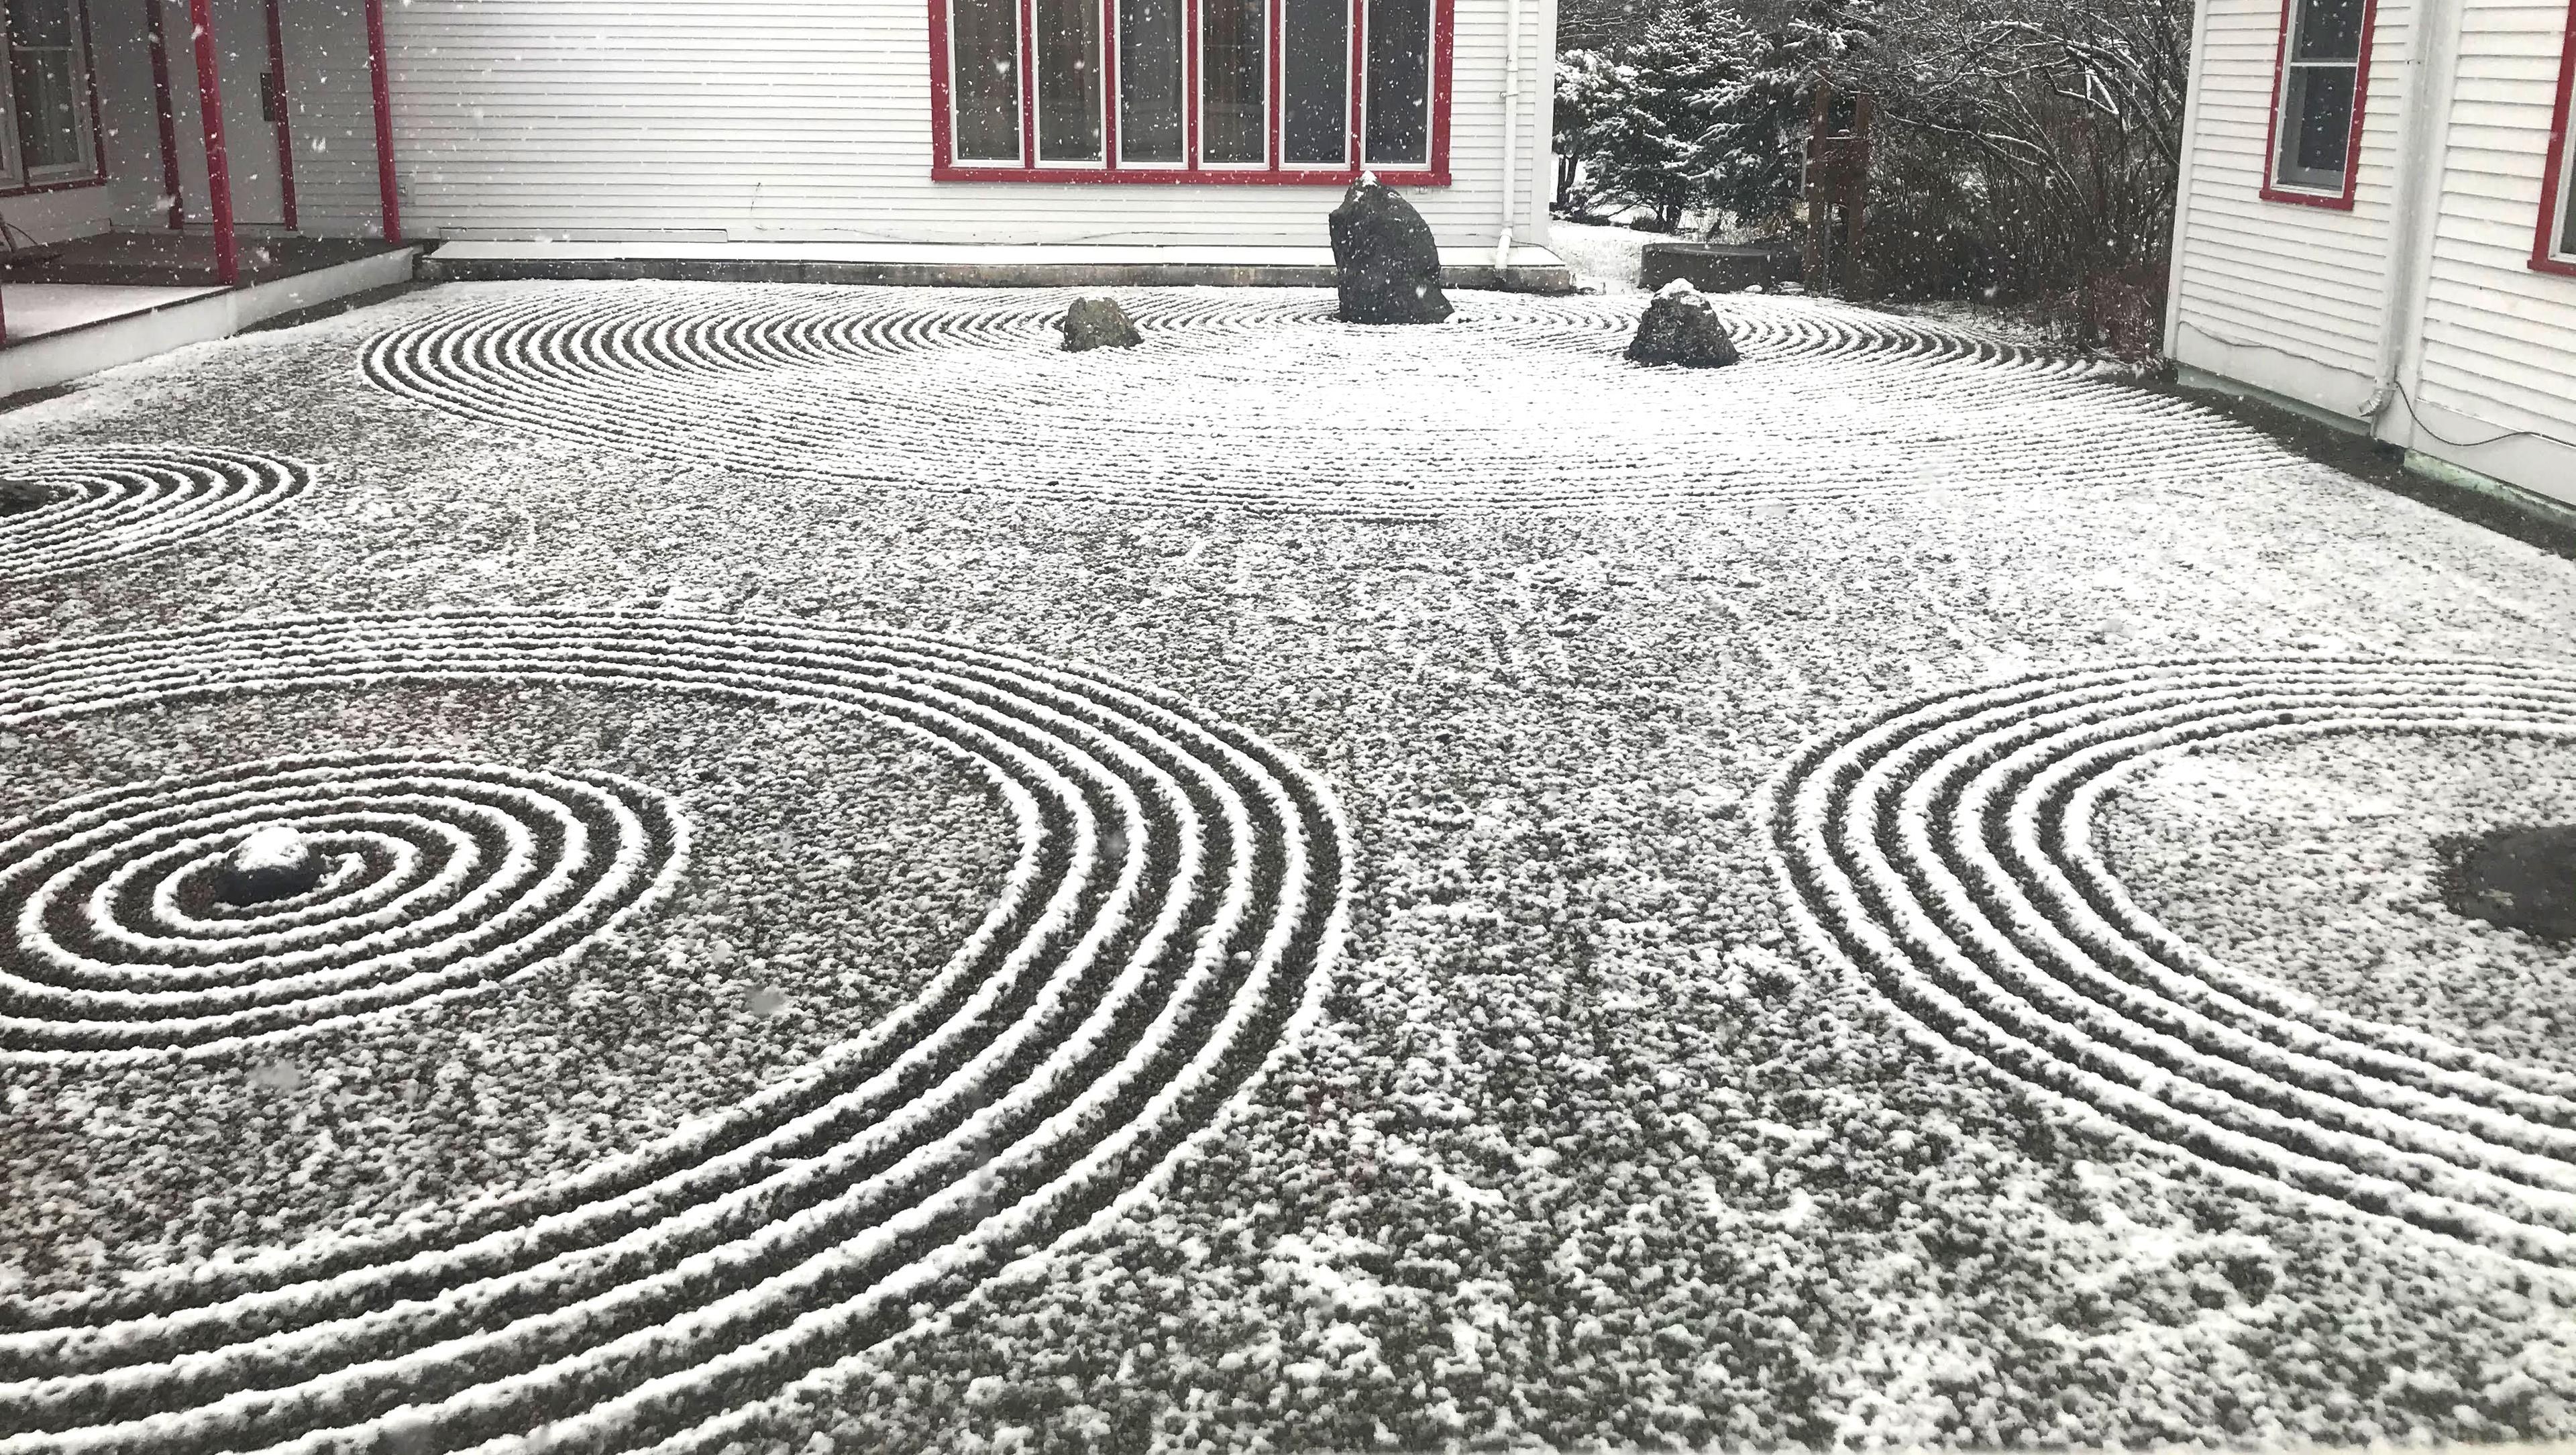 Japanese style Rock Garden at Karme Choling Meditation Retreat Center, Vermont